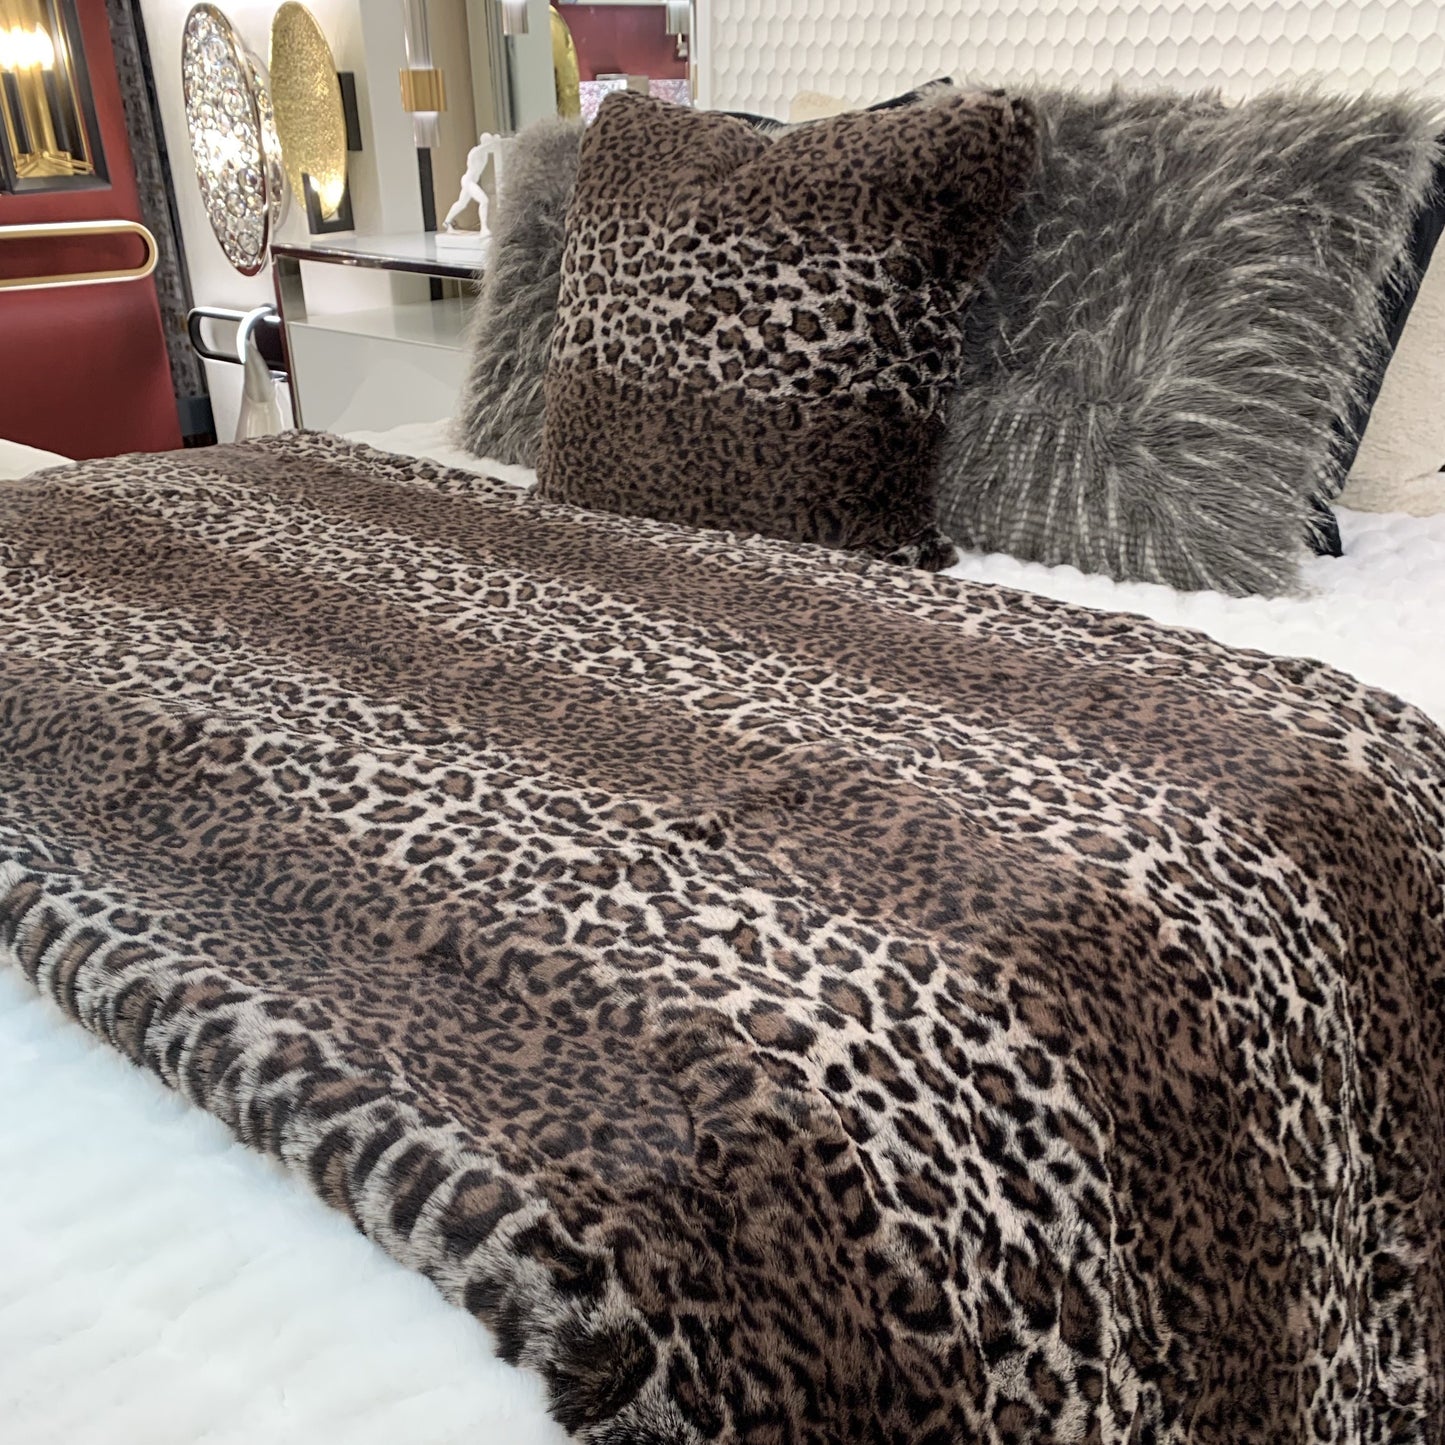 Leopard Cheetah Jaguar Animal Print Cozy Fuzzy Faux Fur King Size Blanket/Quilts/Coverlet/ Throw